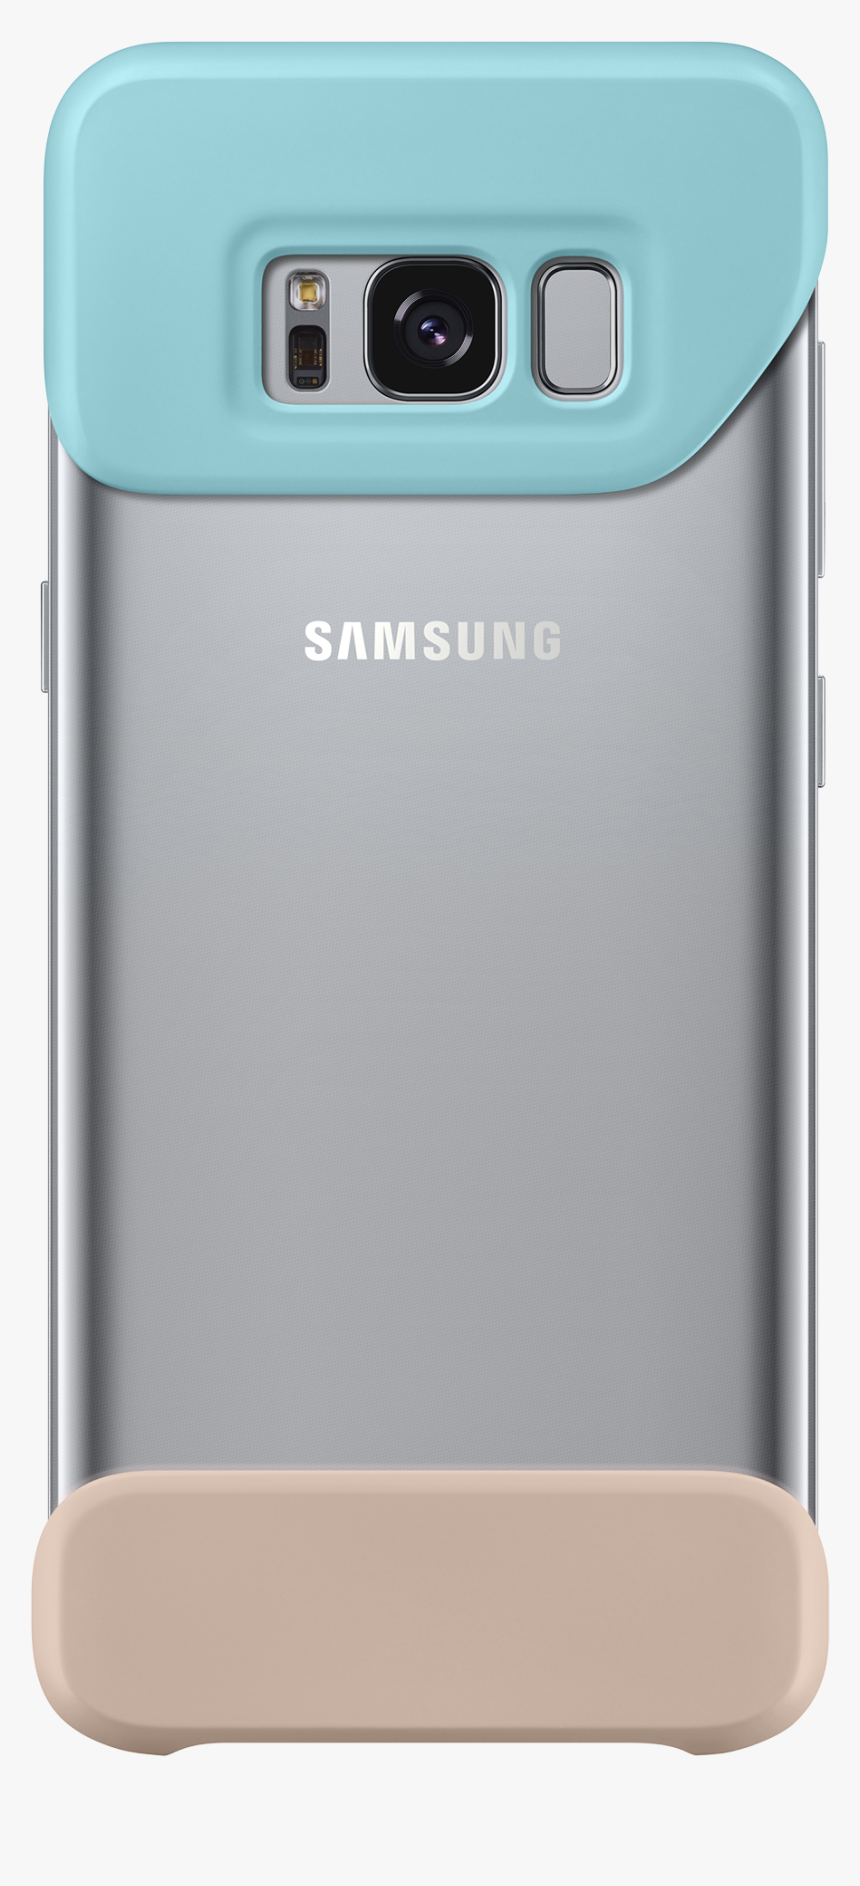 Samsung S8 Png, Transparent Png, Free Download